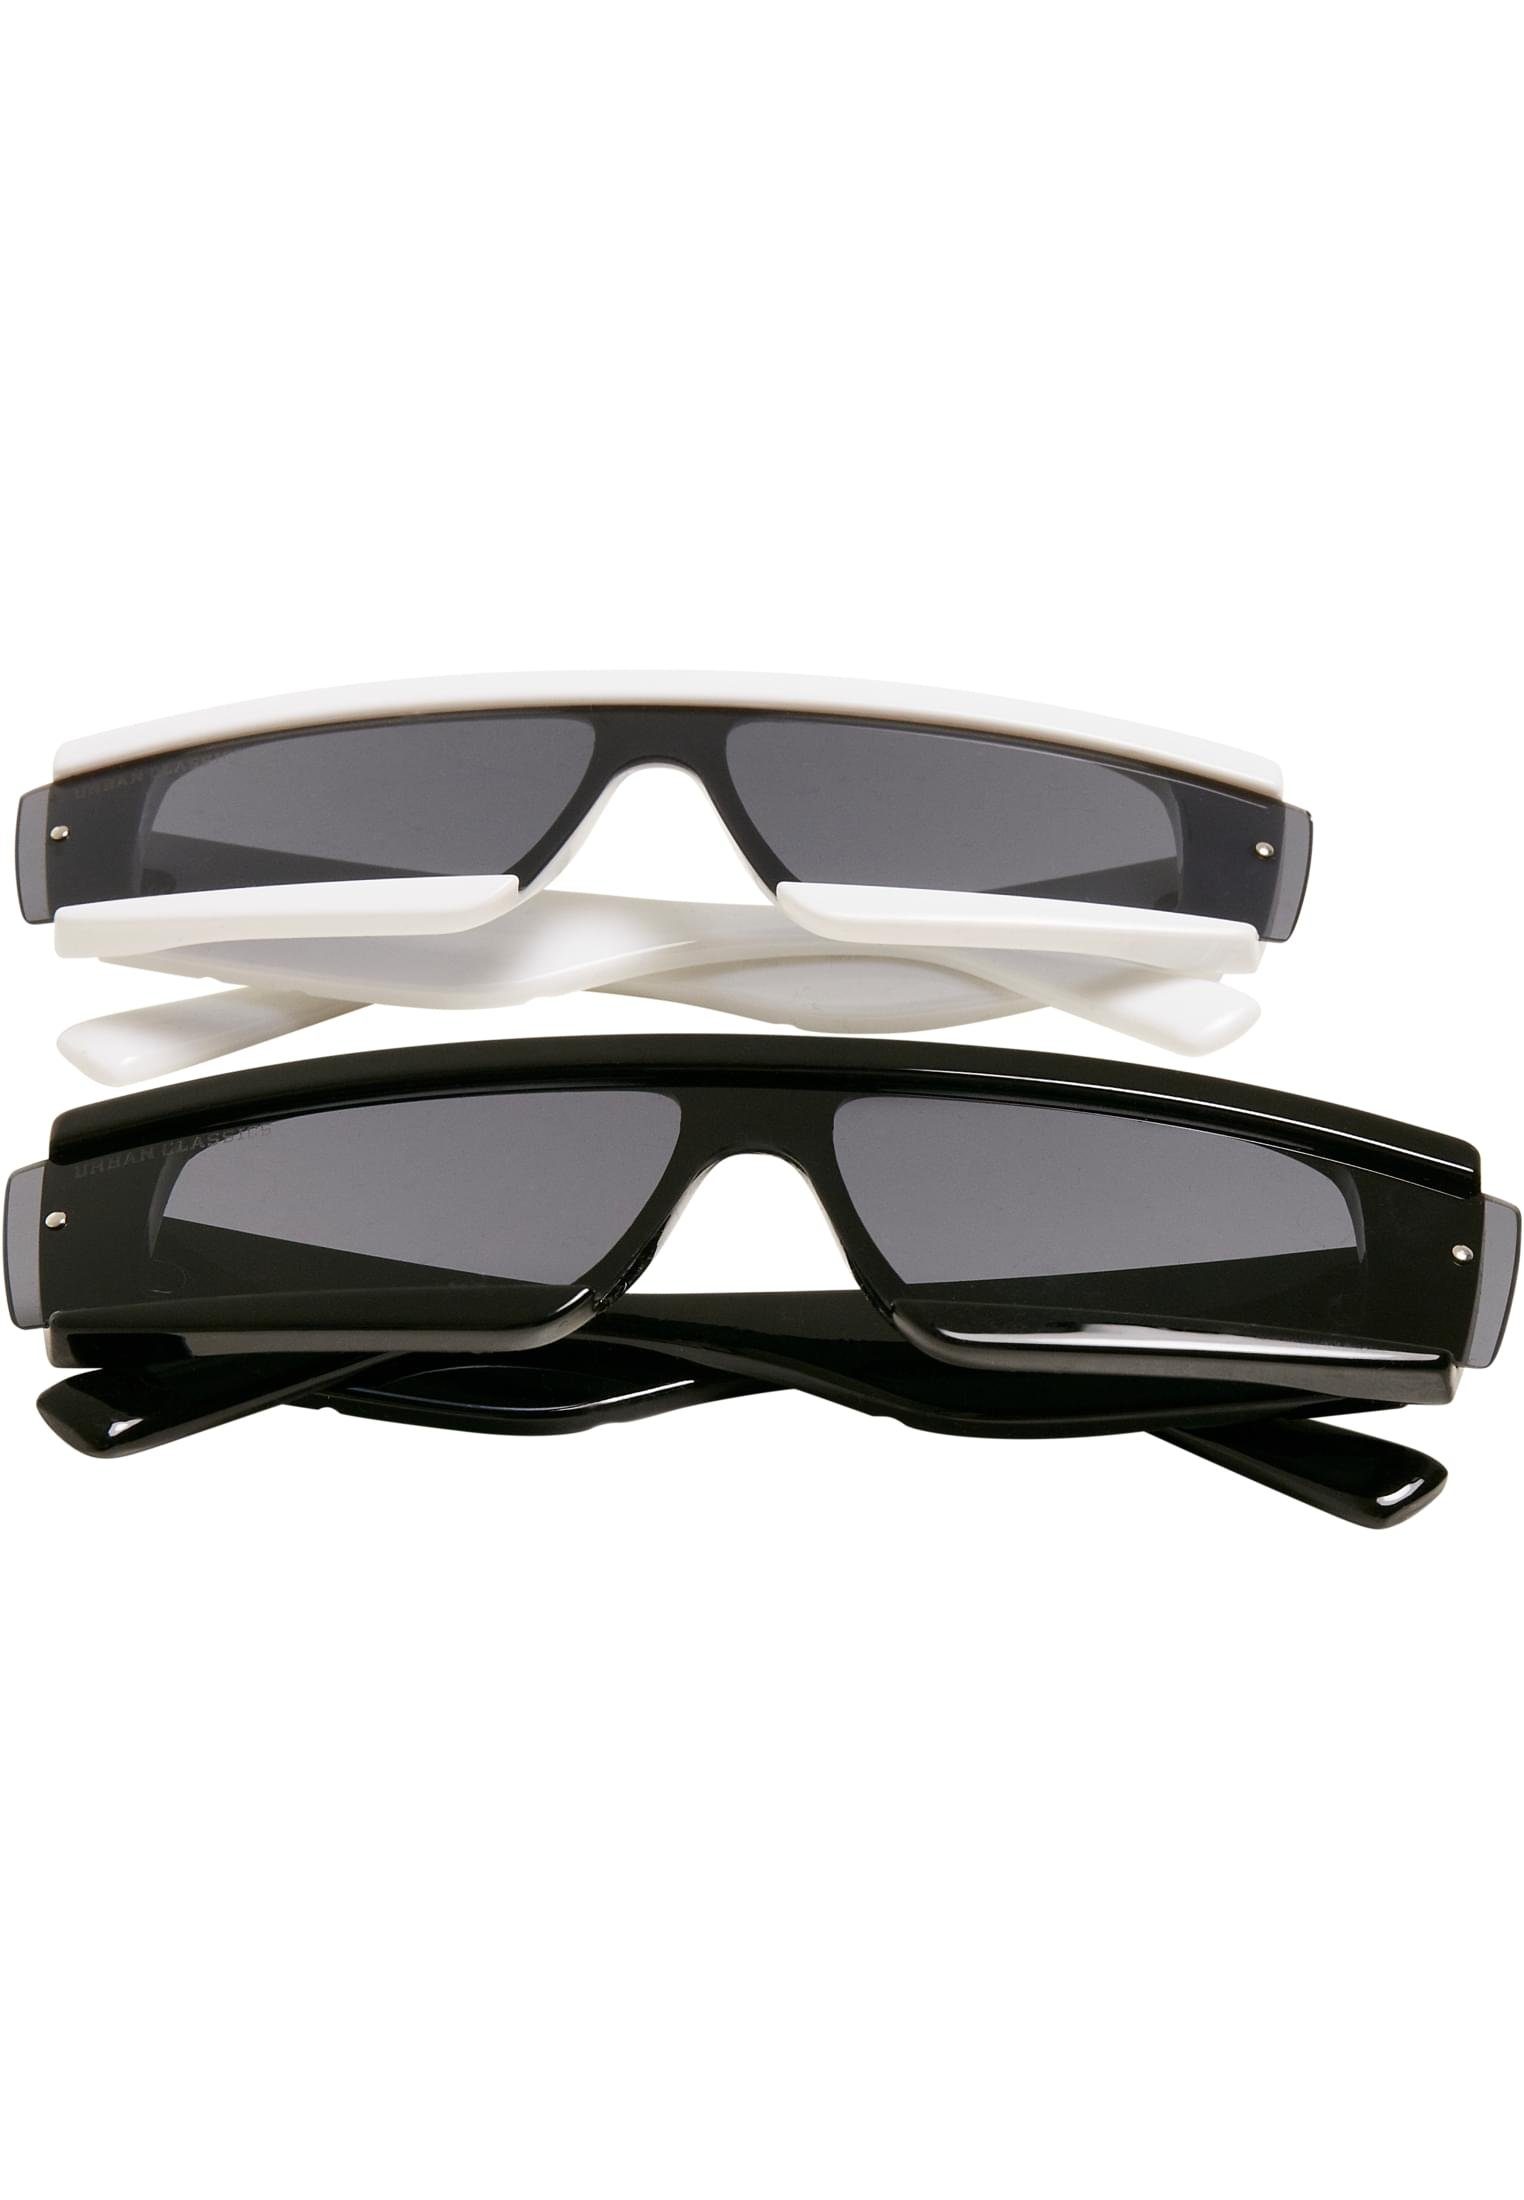 CLASSICS black/white Alabama Sonnenbrille Unisex Sunglasses URBAN 2-Pack